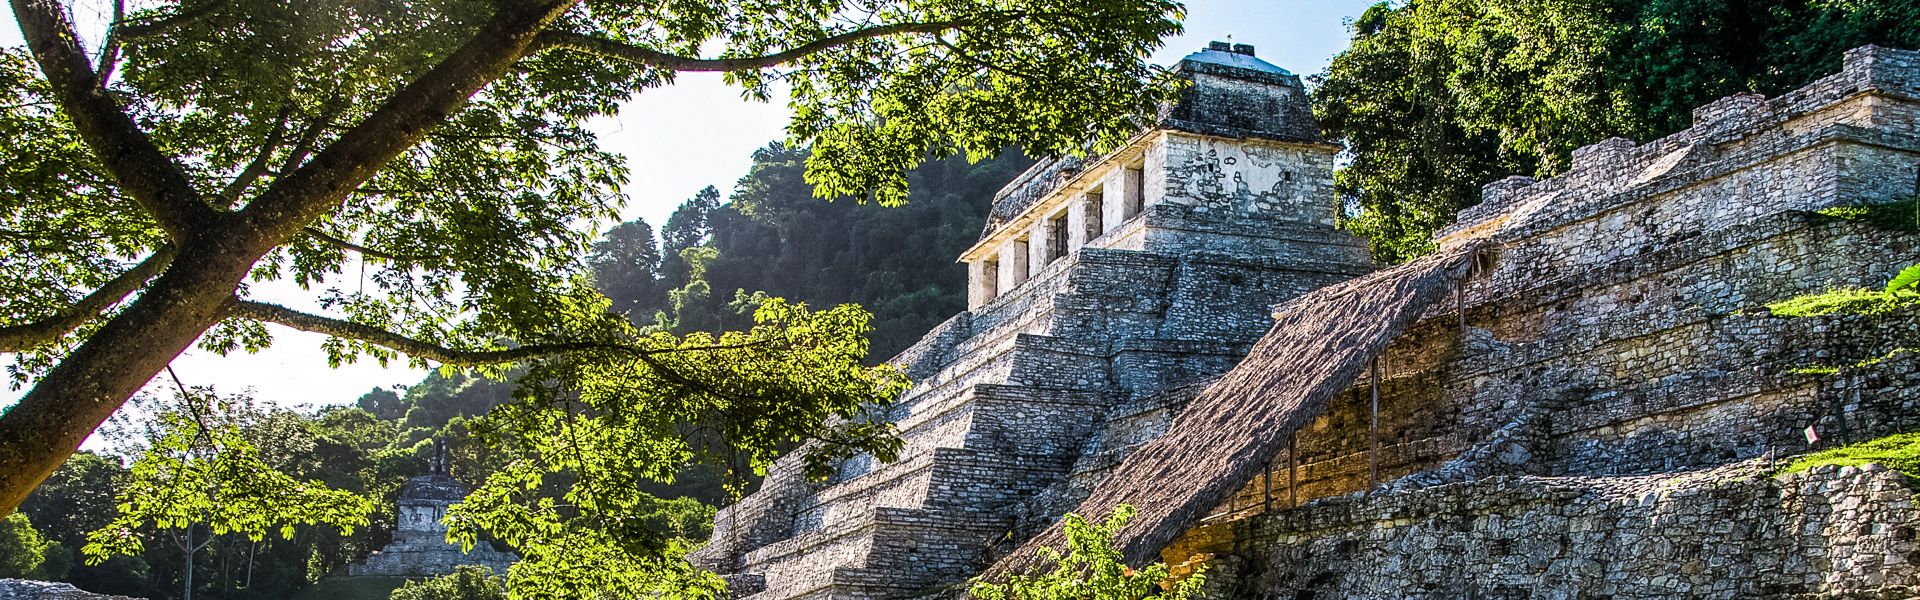 Ehemalige Maya-Metropole Palenque |  Kurt Heller / Chamleon